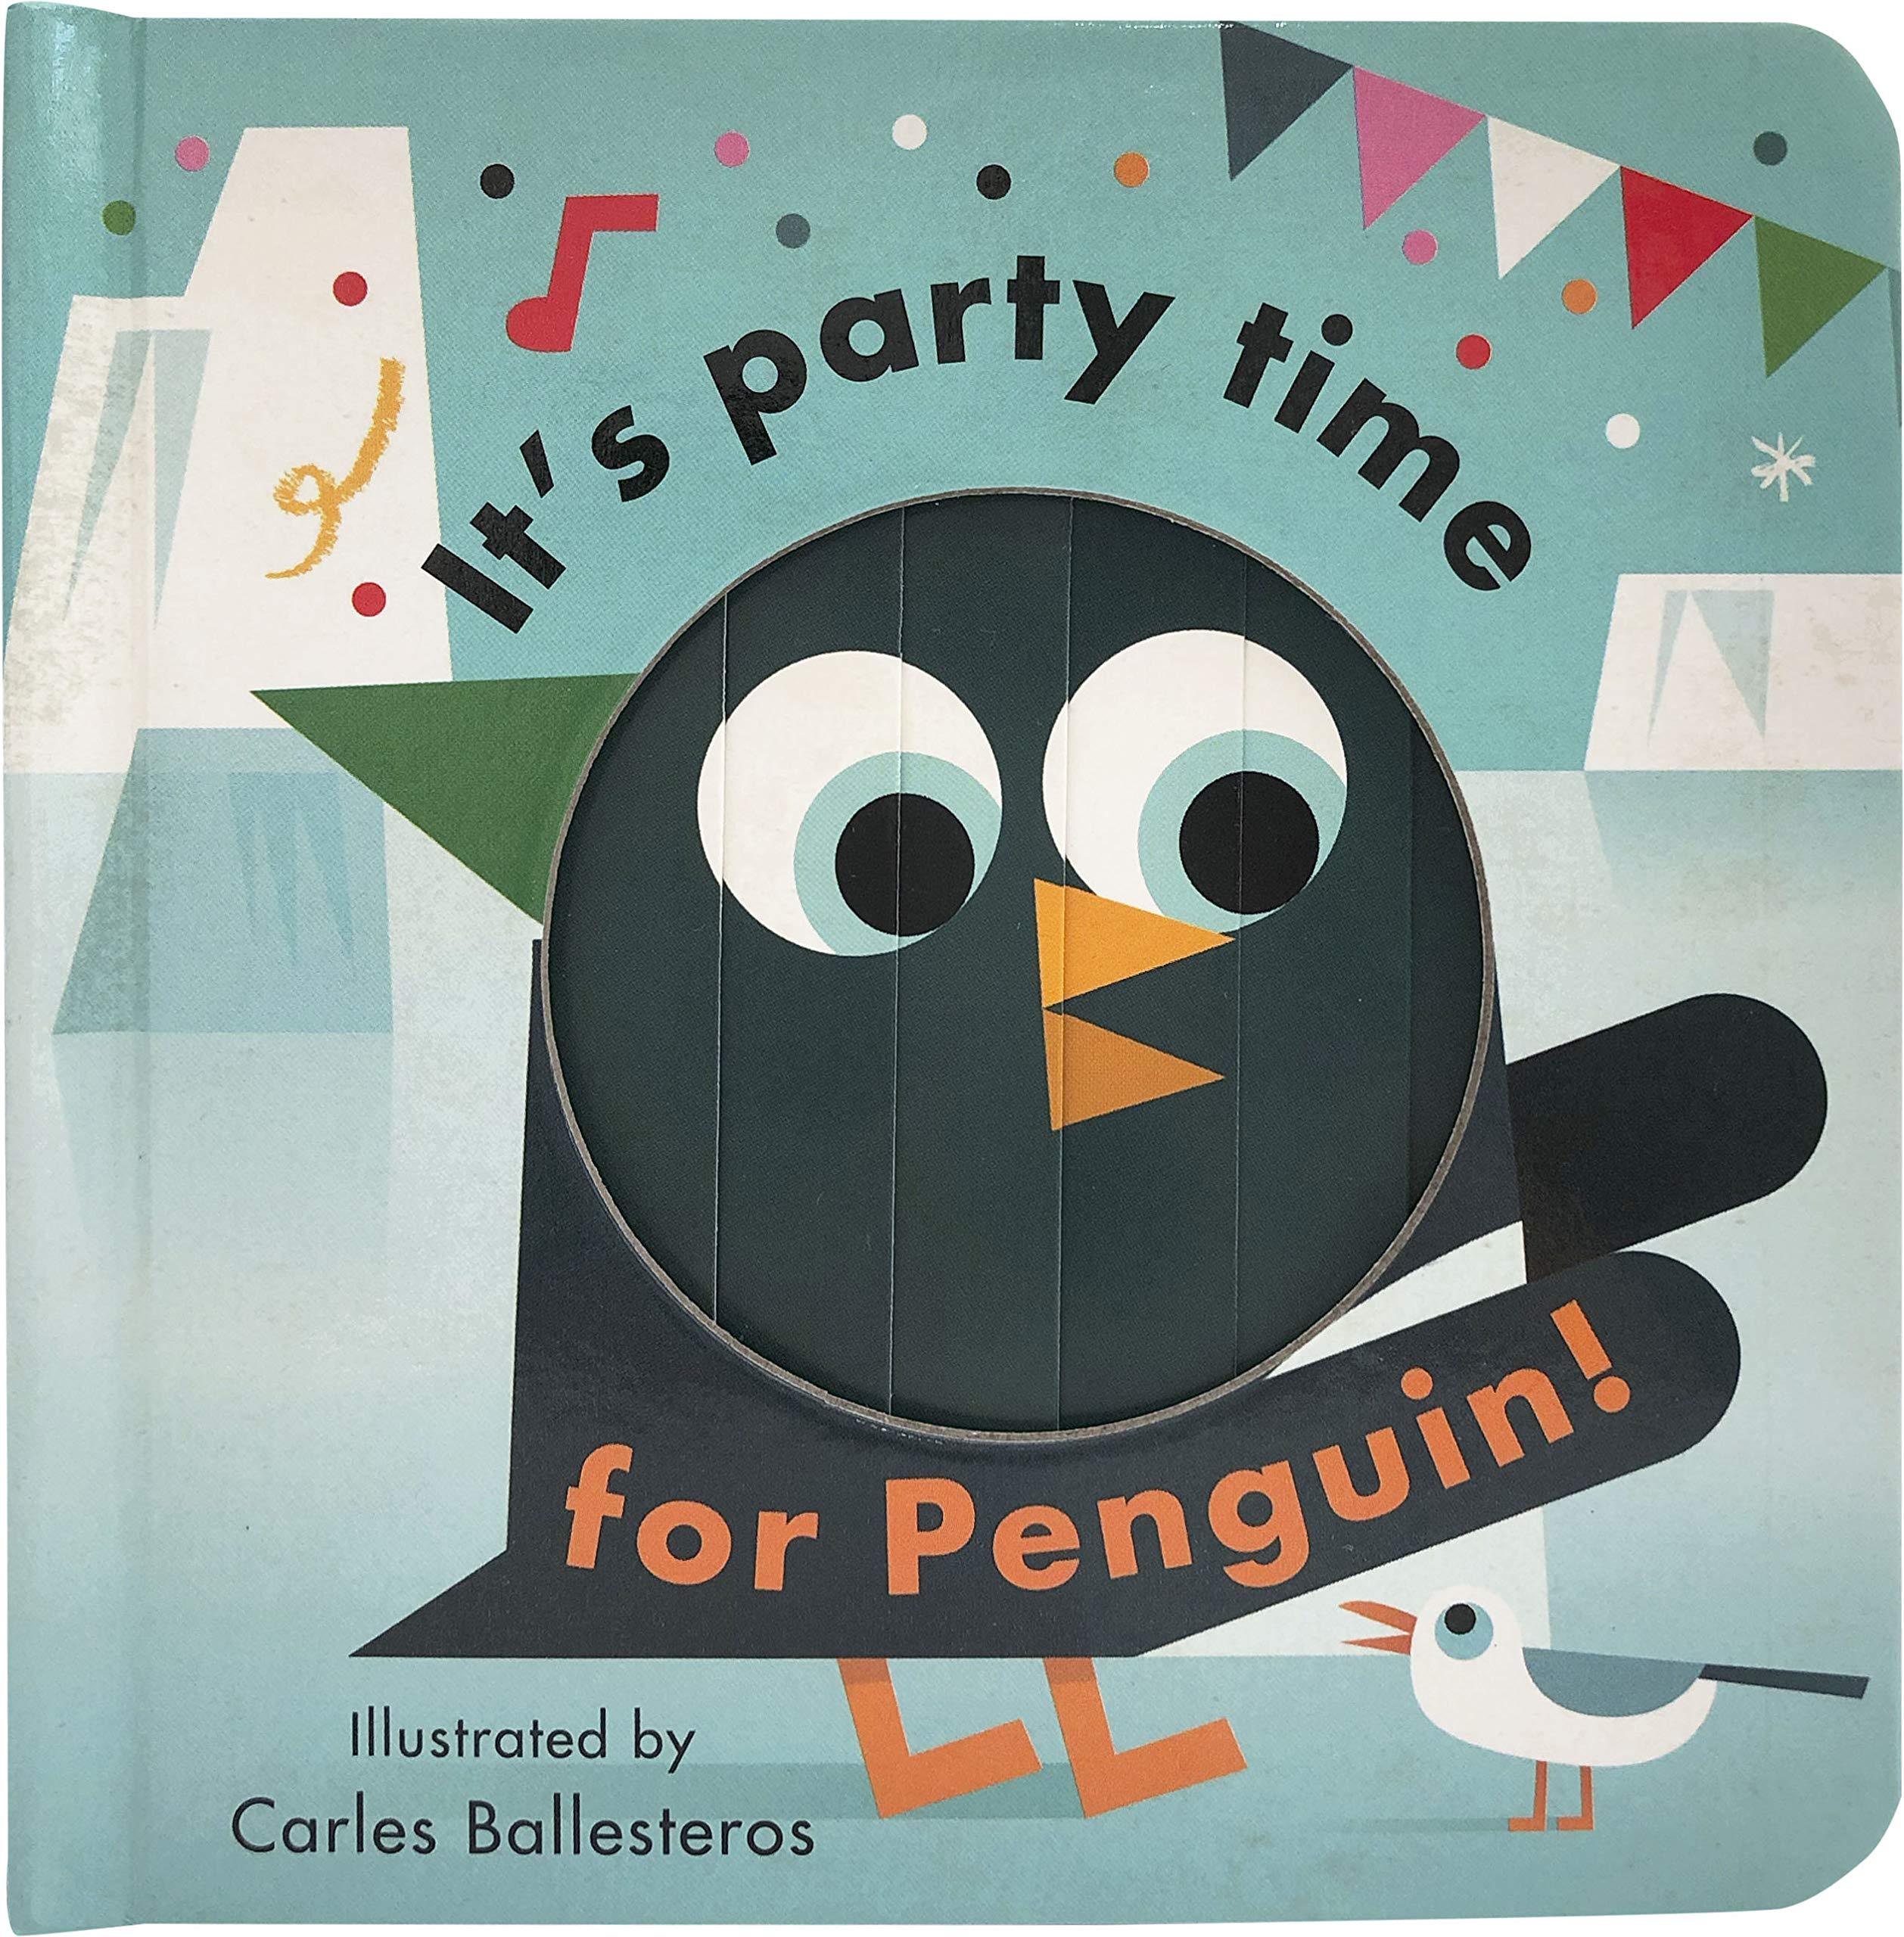 Little Faces: It's Party Time For Penguin